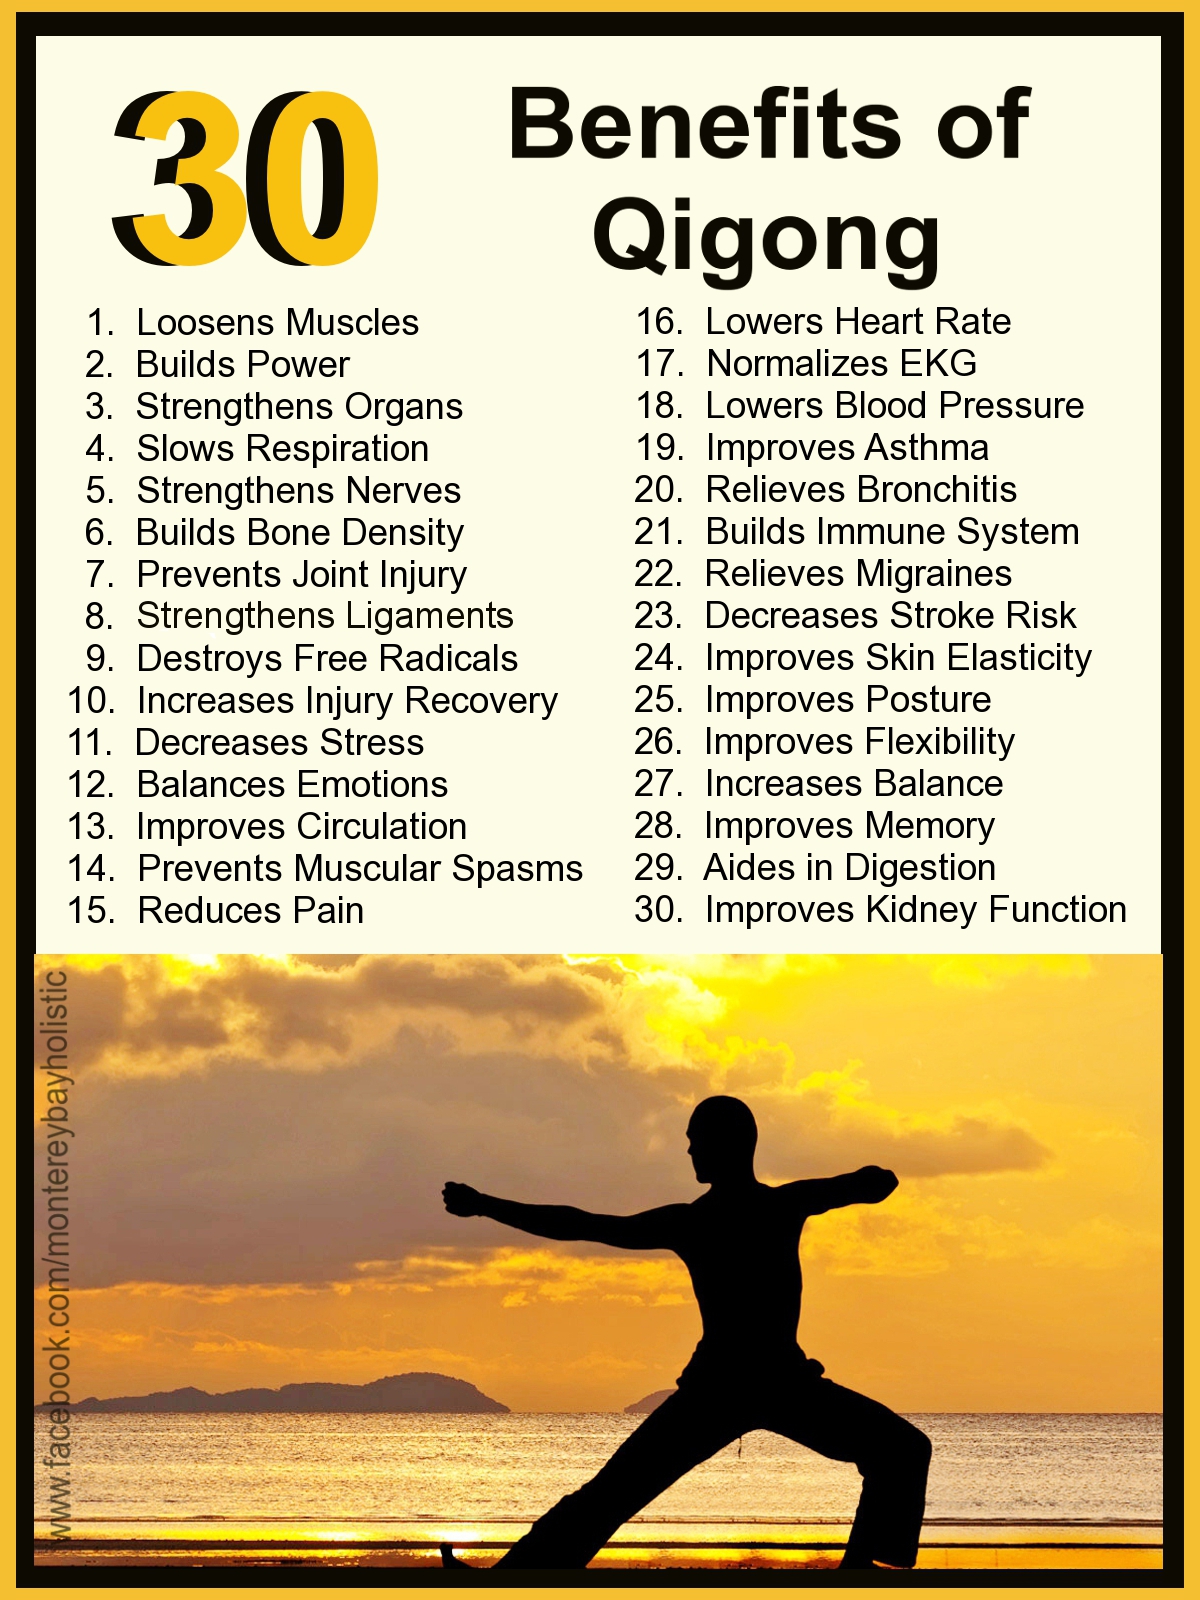 Benefits of qigong exercises pdf file